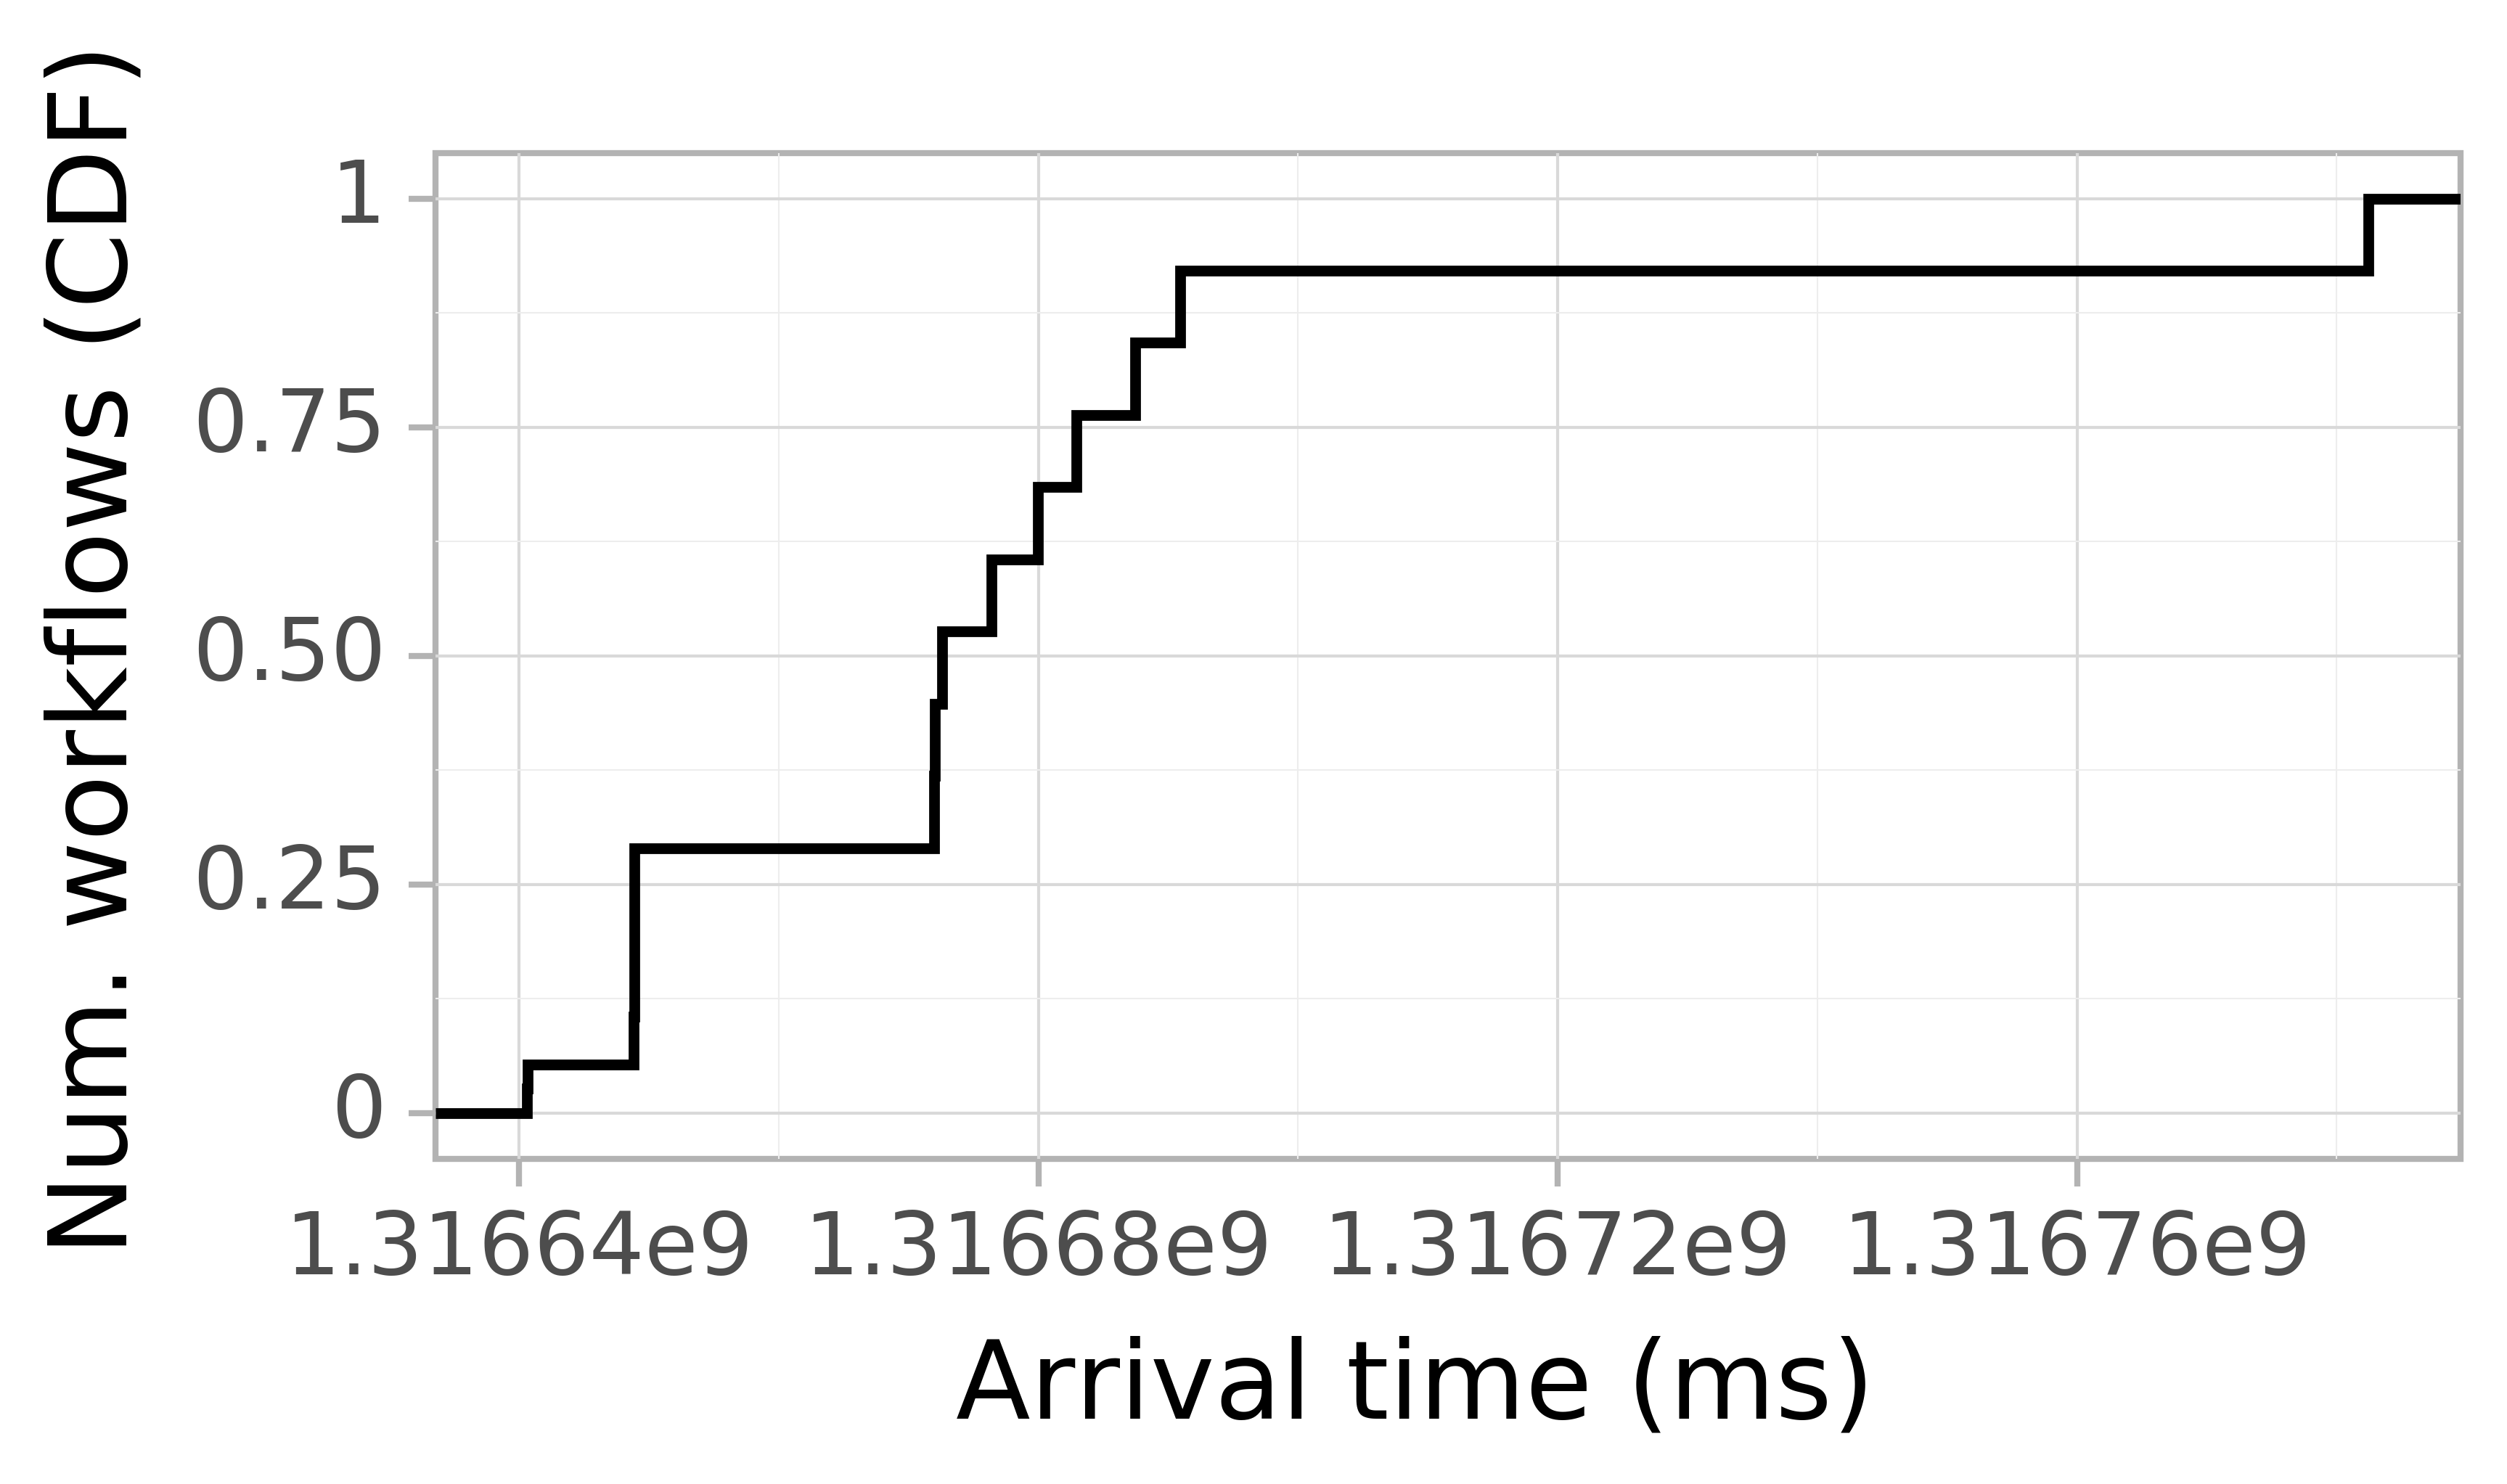 Job arrival CDF graph for the Pegasus_P7 trace.